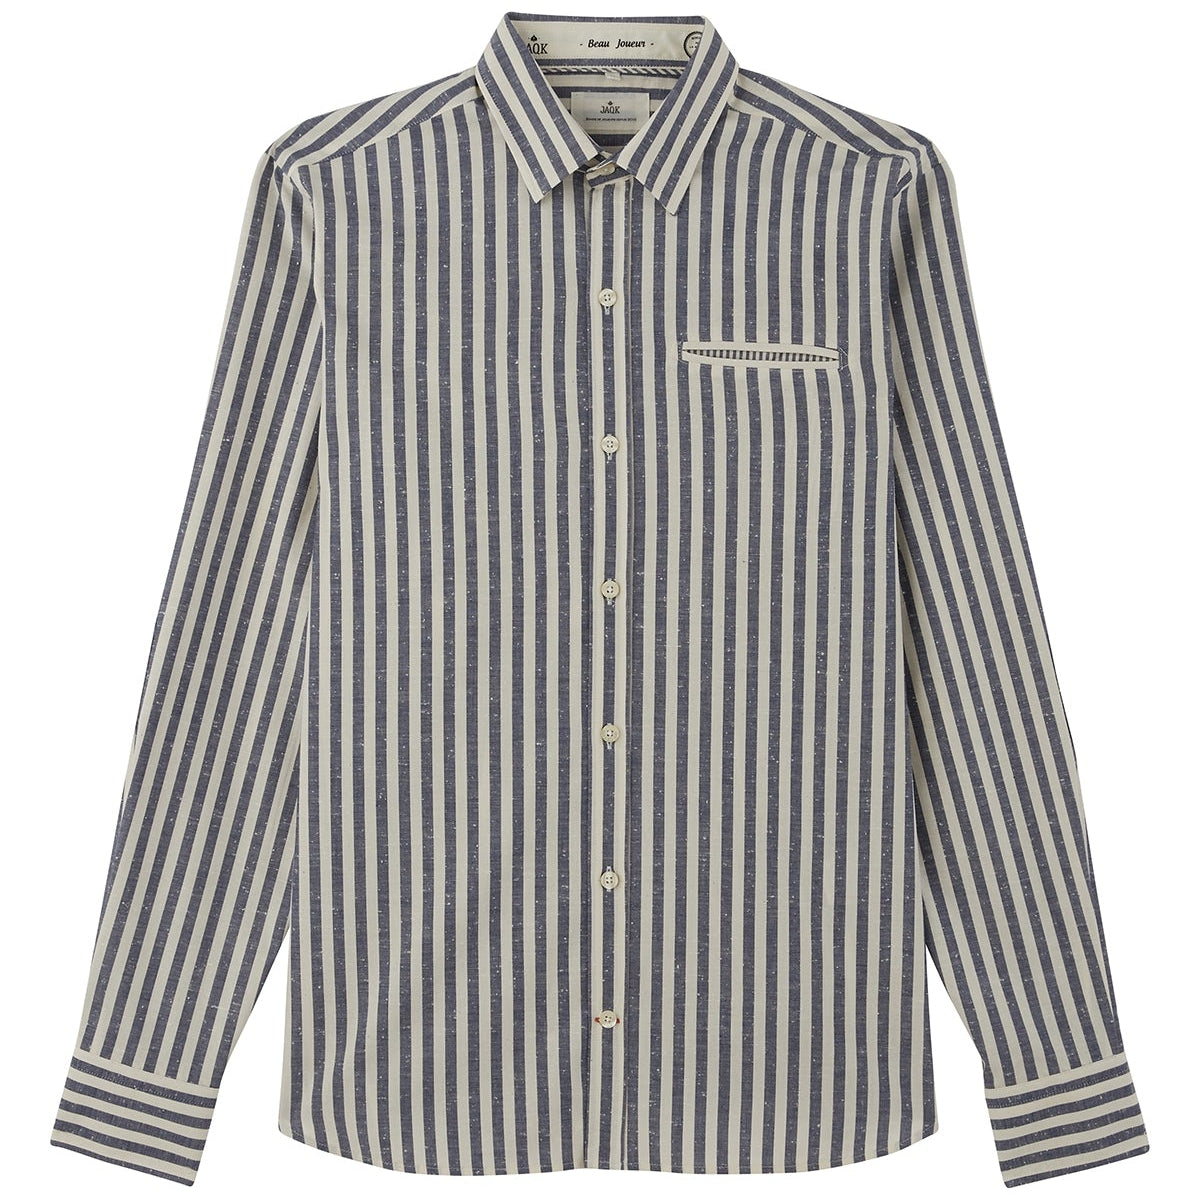 Jaqk - Blue Stripes Shirt - W. Sako - The Good Chic